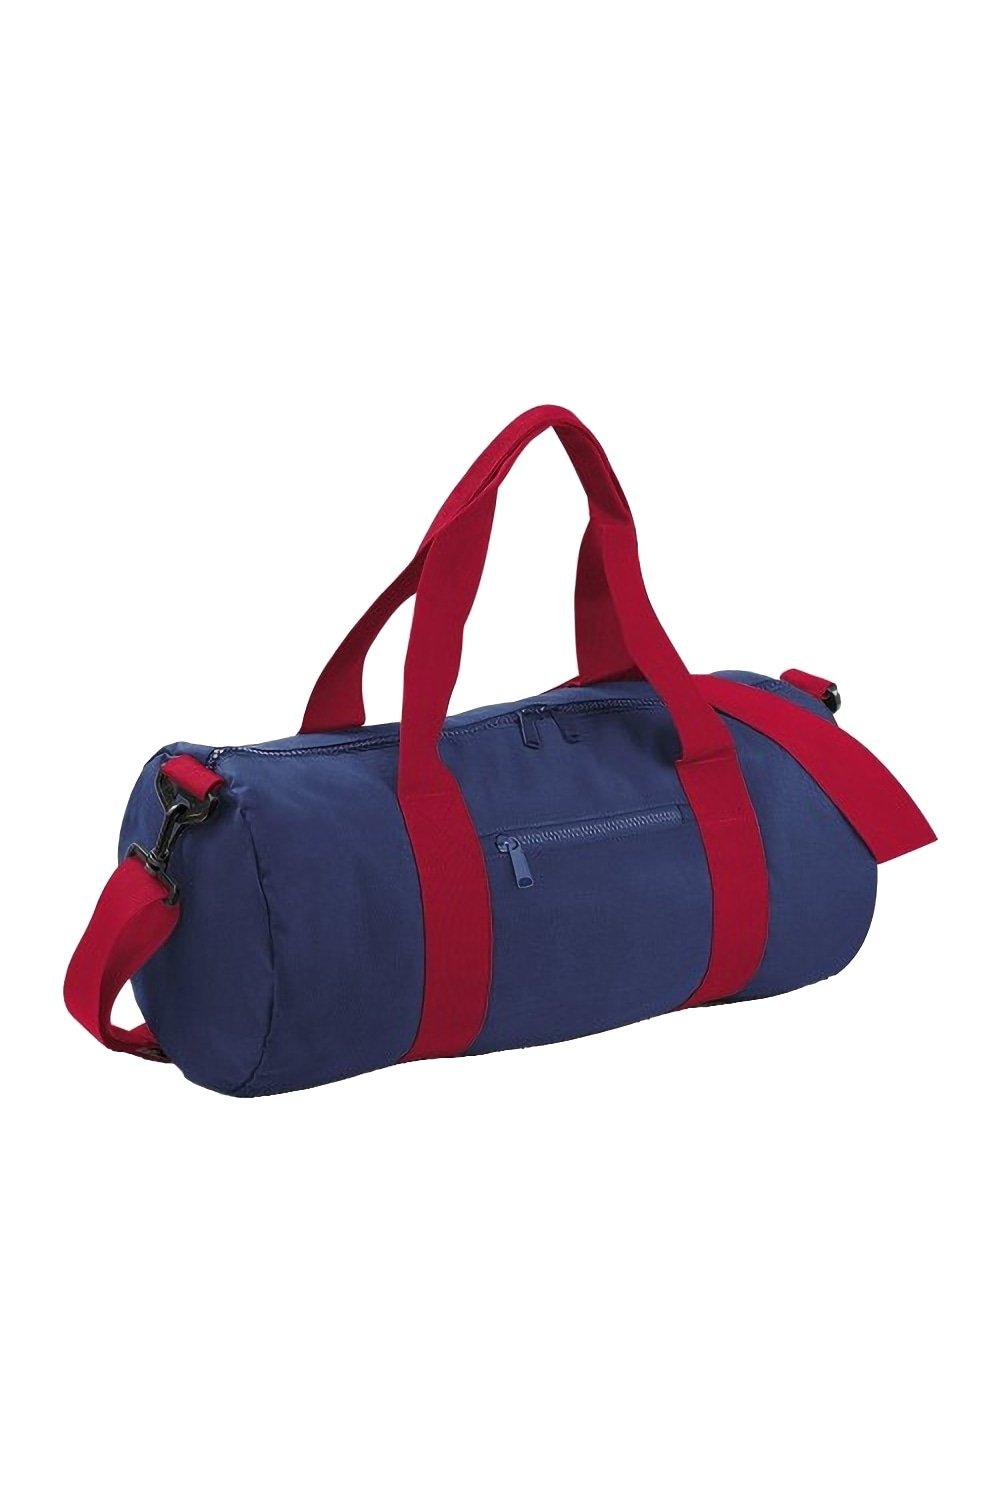 Обычная университетская бочка/спортивная сумка (20 литров) Bagbase, темно-синий домик jerrik 50 x 25 x 33 см